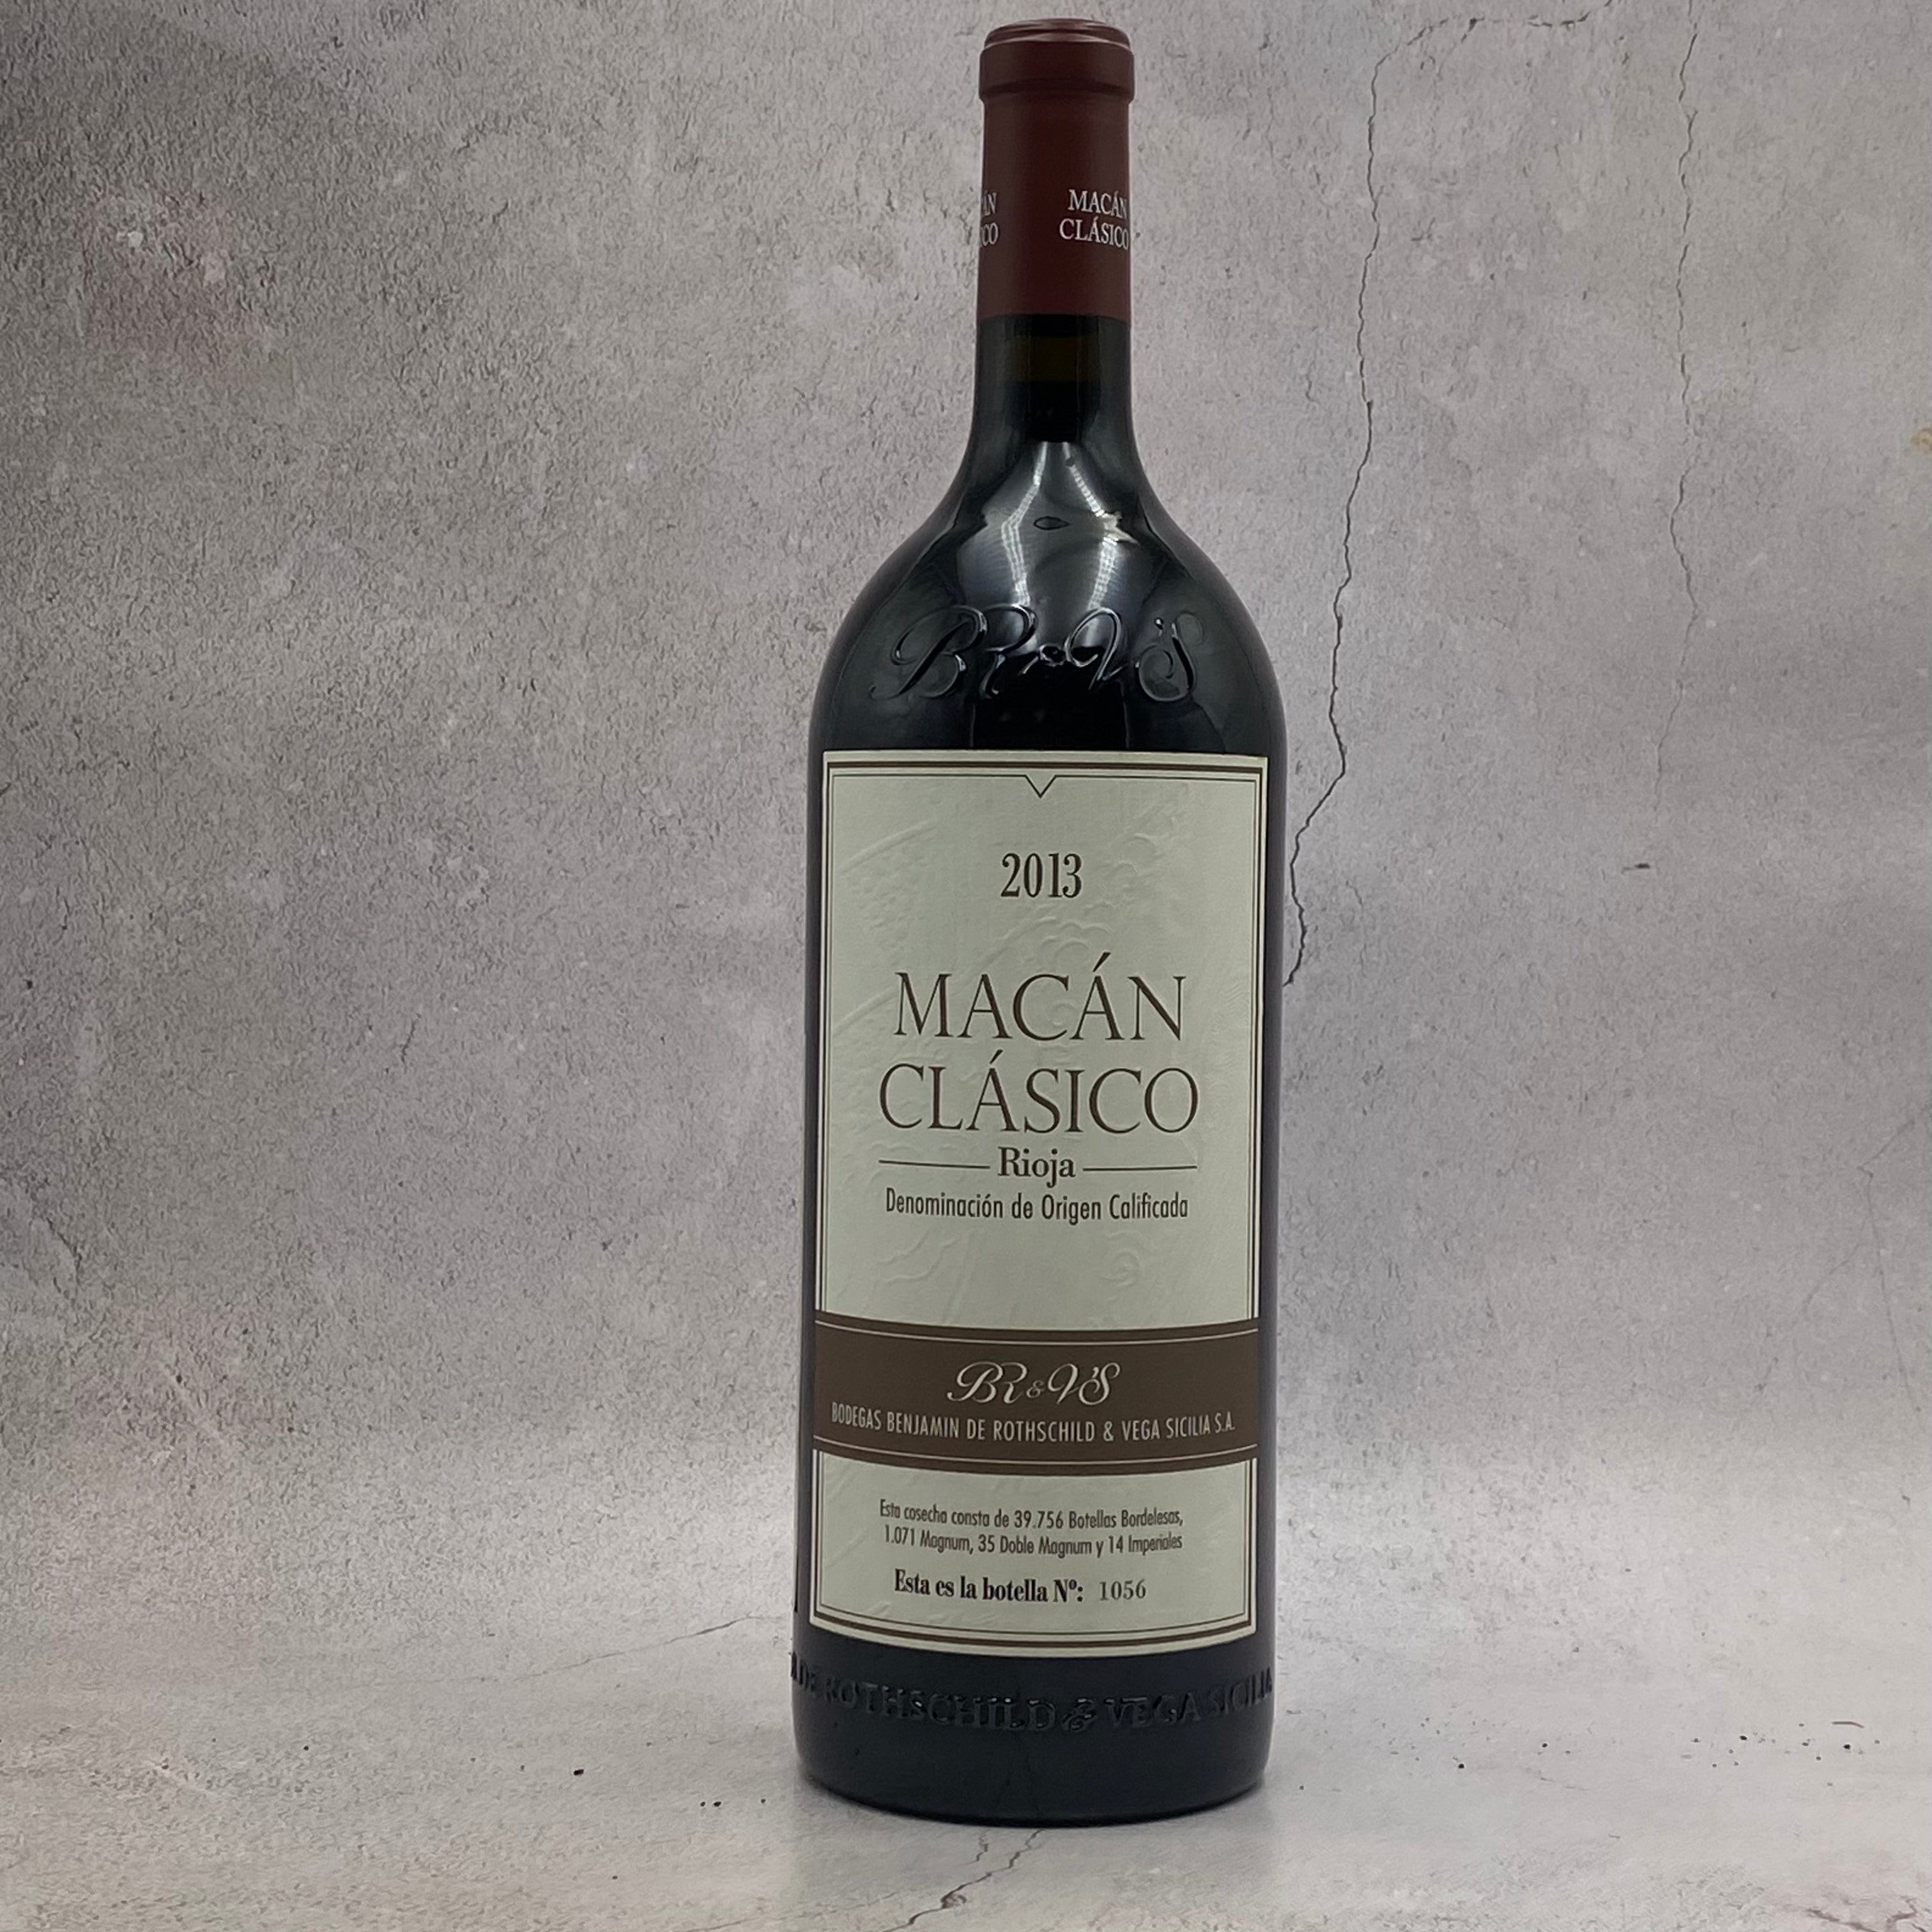 Macan Rioja "Clasico" 2013 1.5L